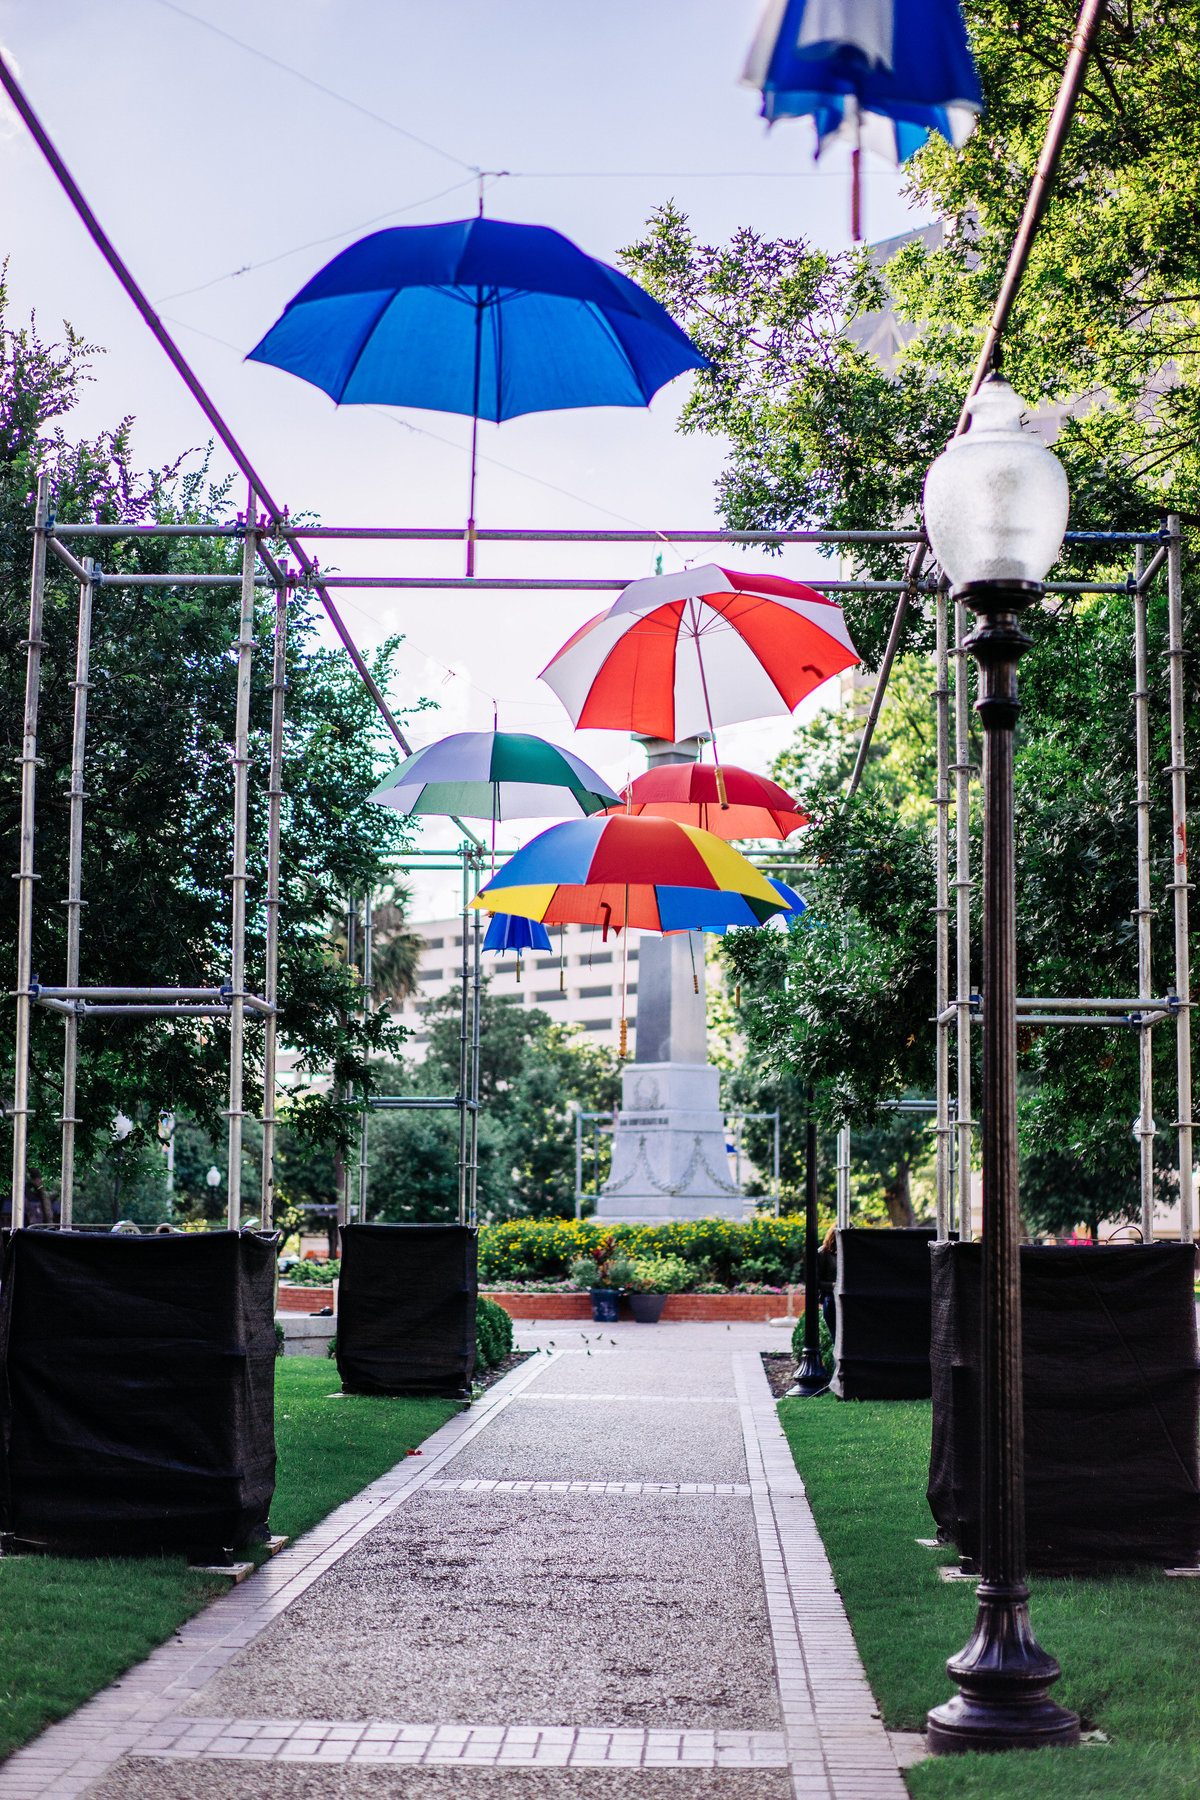 umbrella art instalation in travis park in san antonio